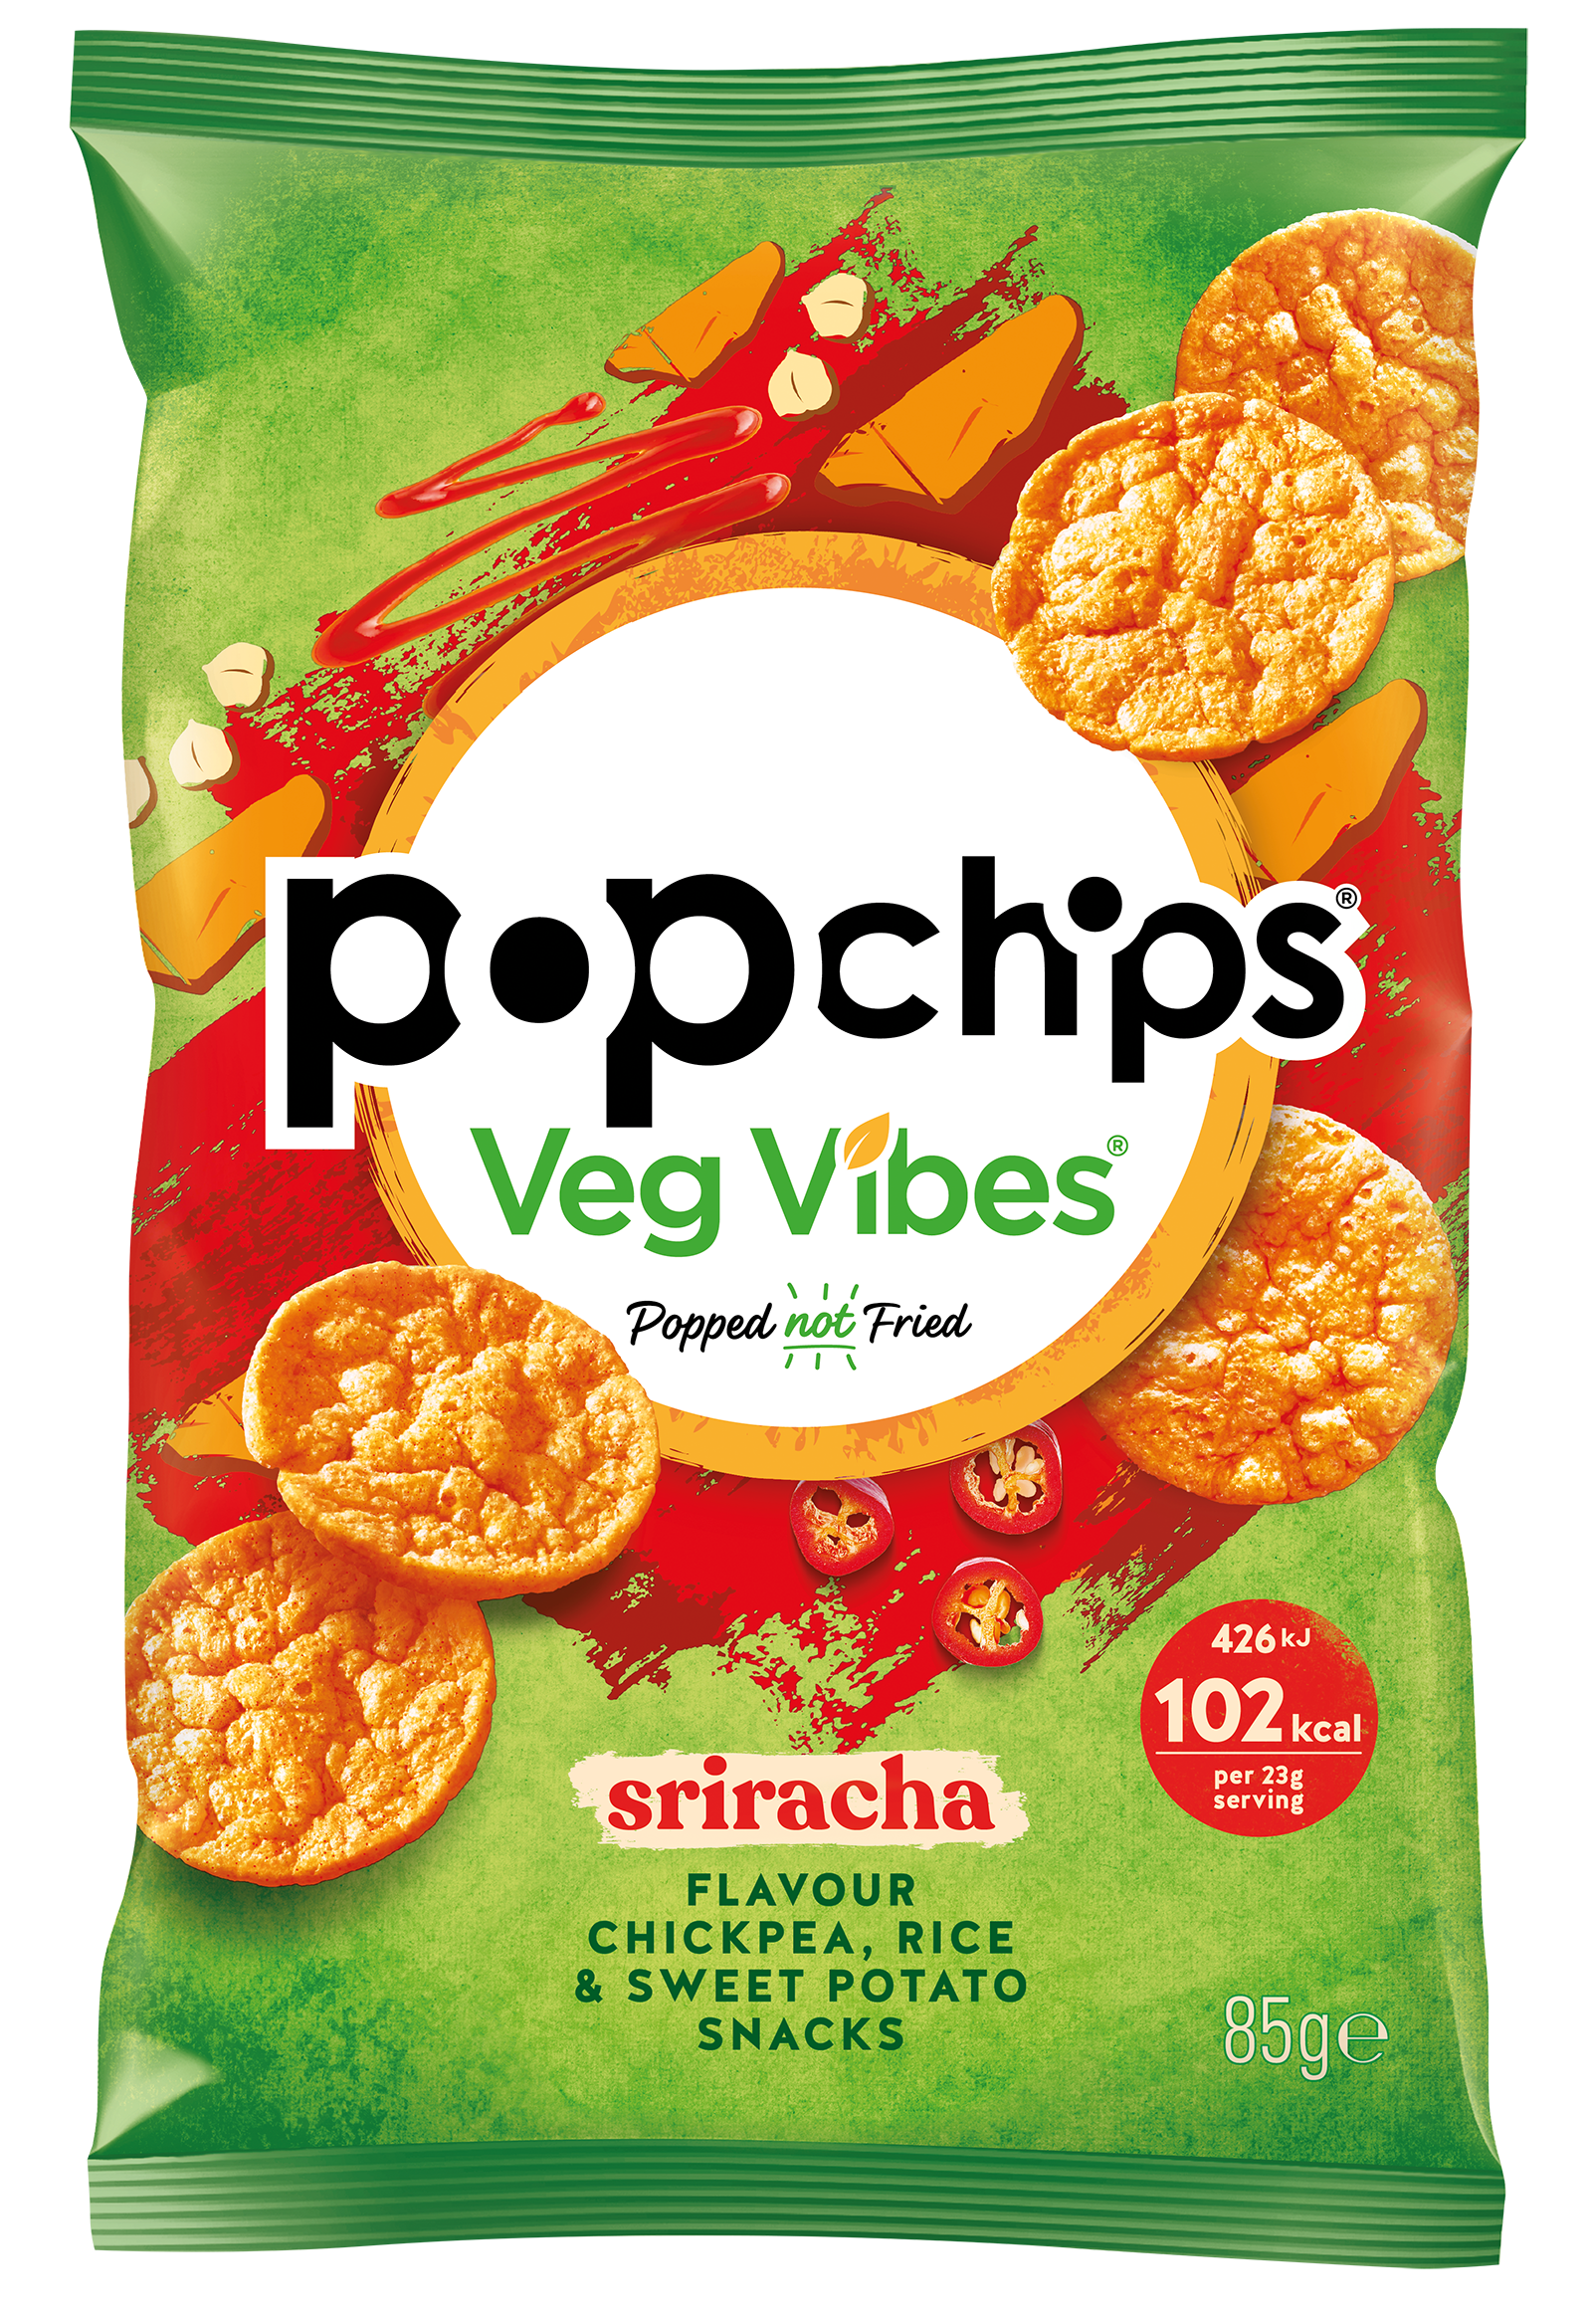 KP Snacks launches brand new range – popchips Veg Vibes